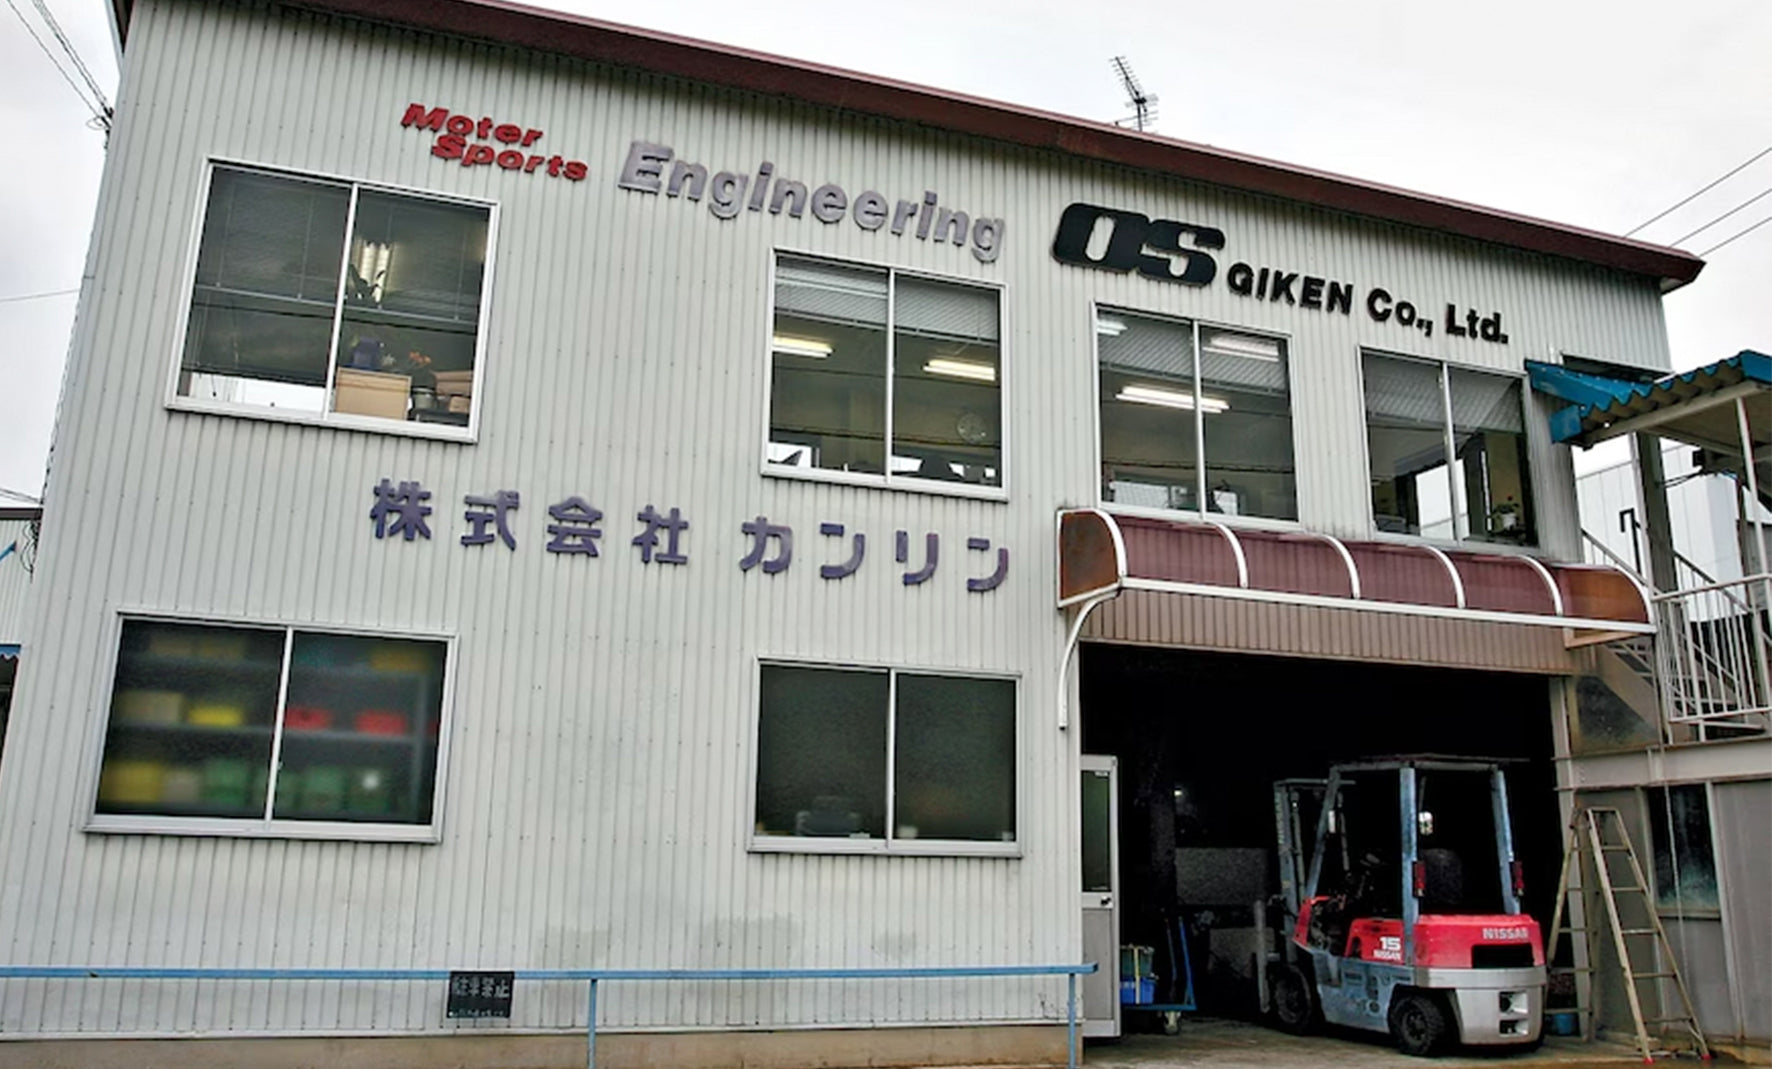 OS Giken manufacturing facility in Okayama, Japan